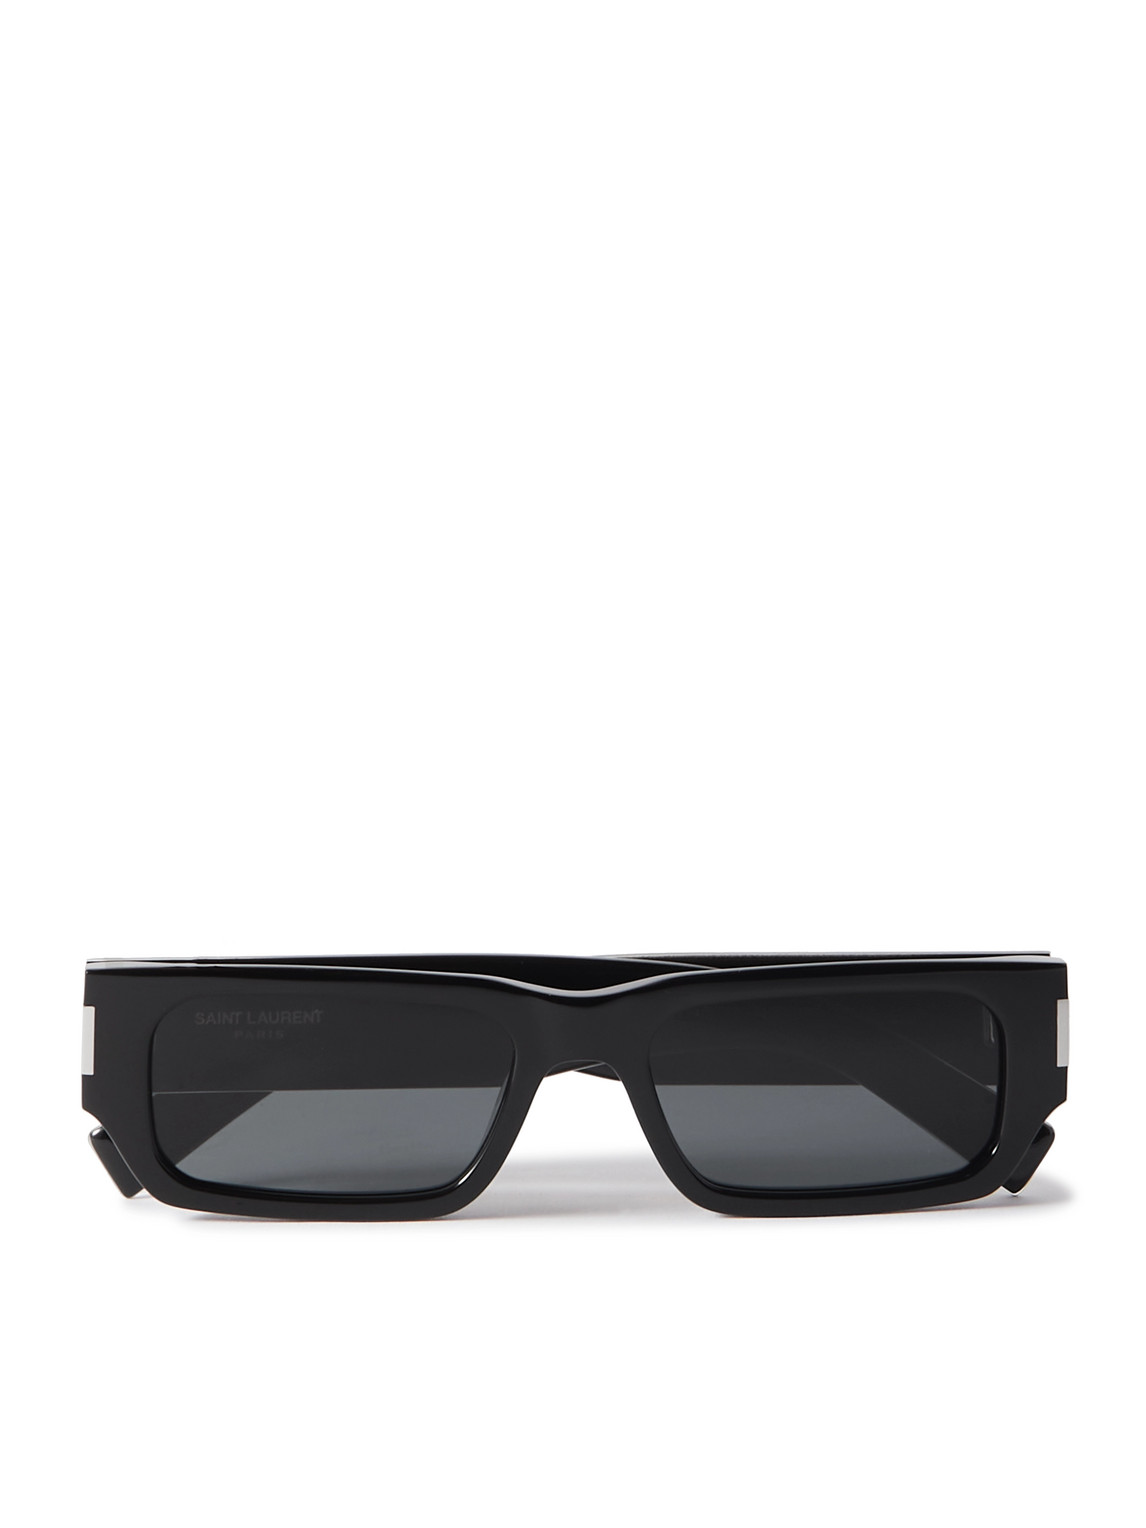 SAINT LAURENT - New Wave Rectangular-Frame Acetate Sunglasses - Men - Black von SAINT LAURENT